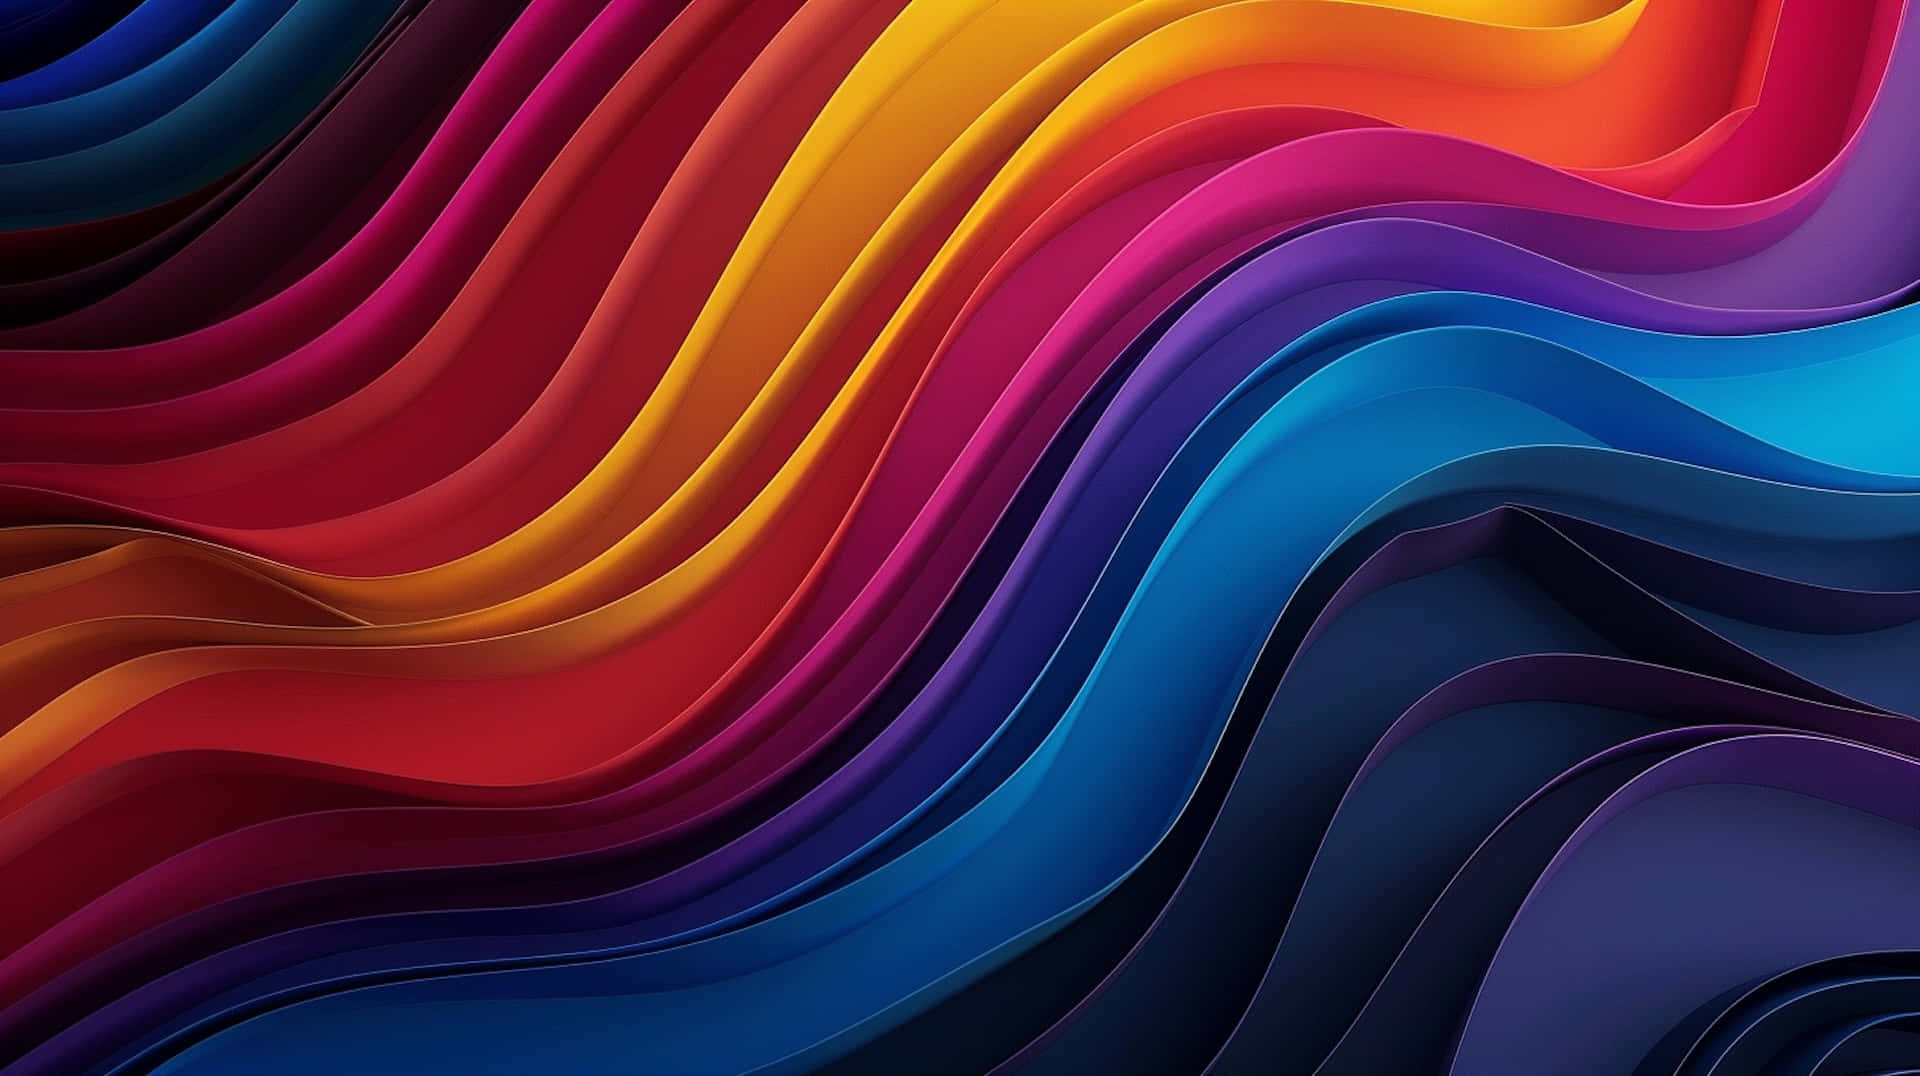 Vibrant Rainbow Waves Abstract Wallpaper